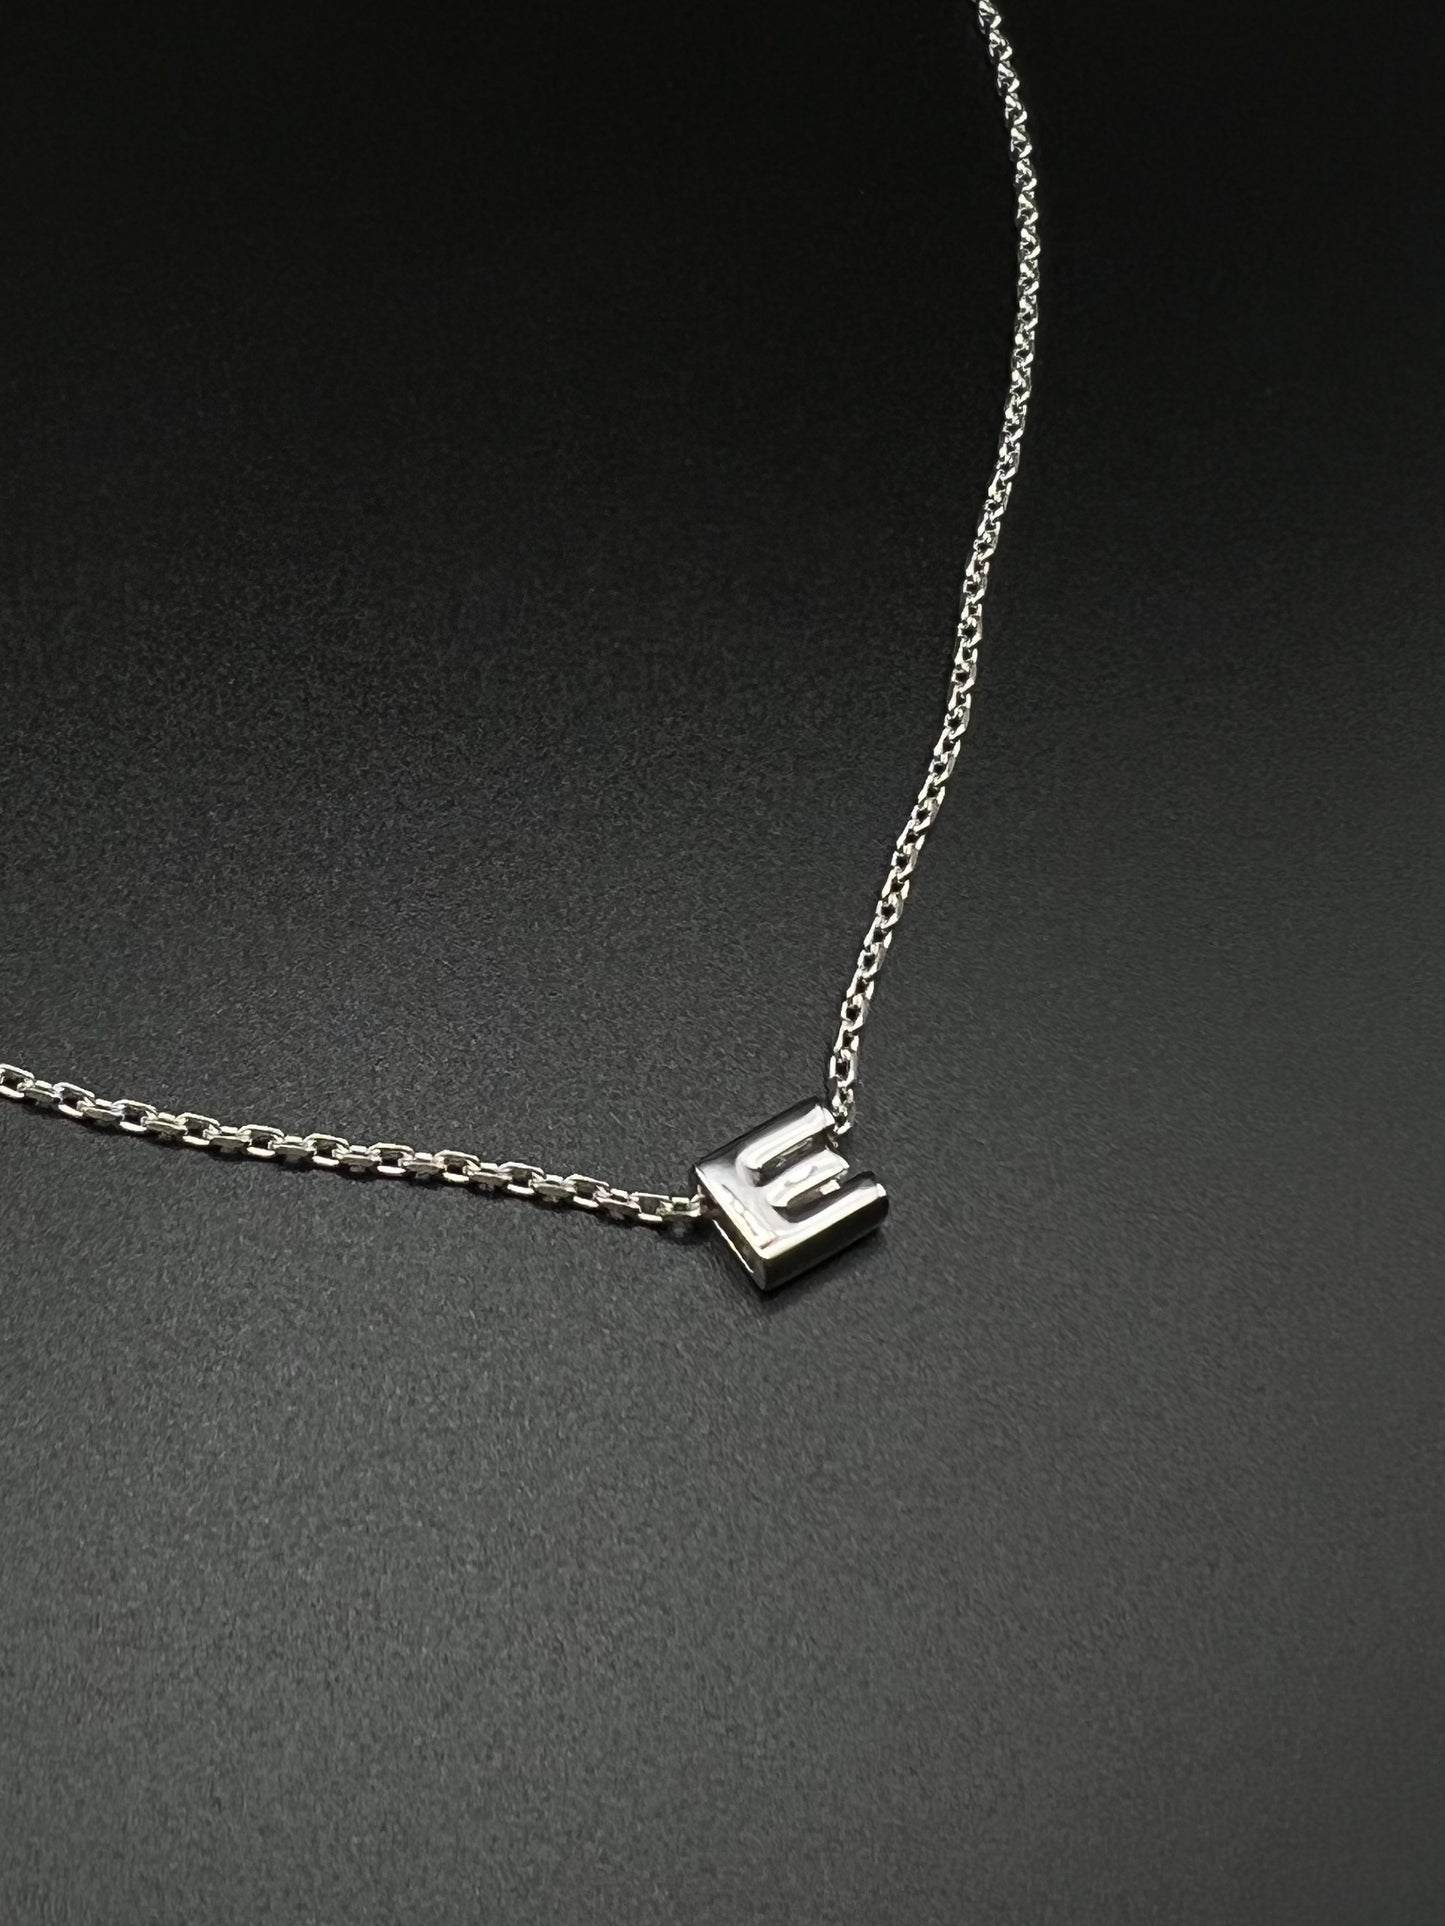 1212 Initial "E" necklace -silver925